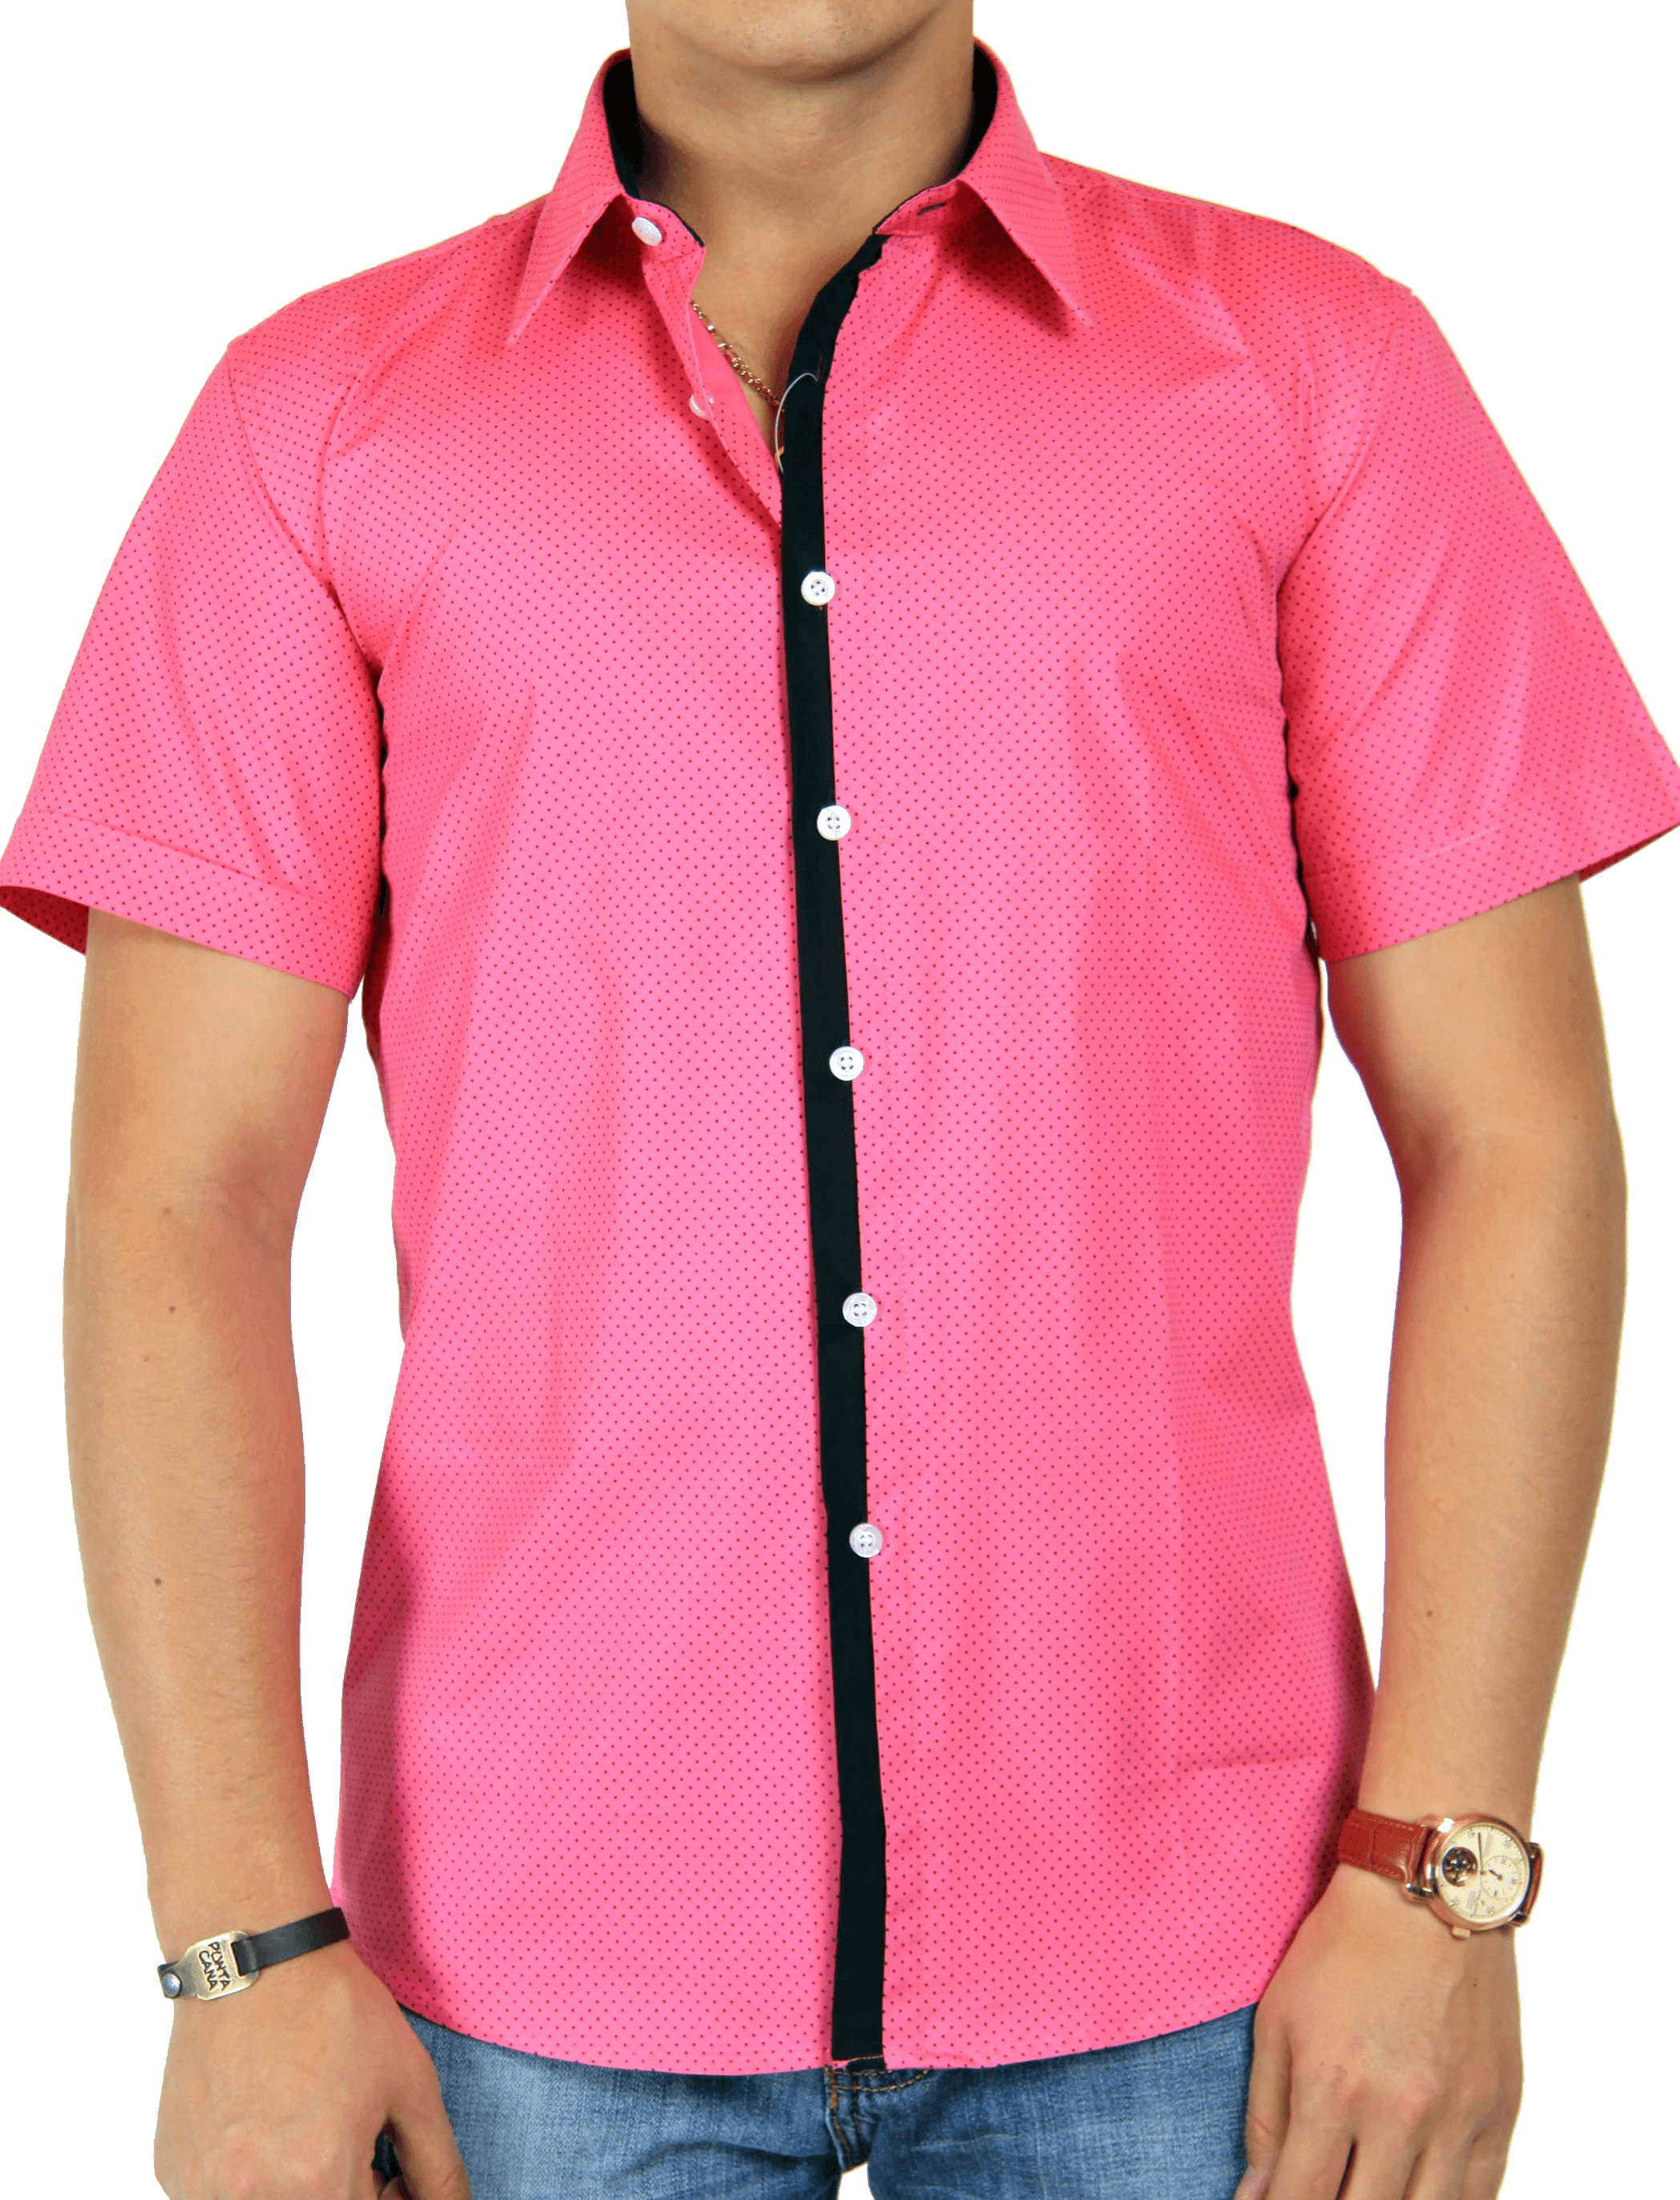 Pink Dress Shirt Png Image PNG Image